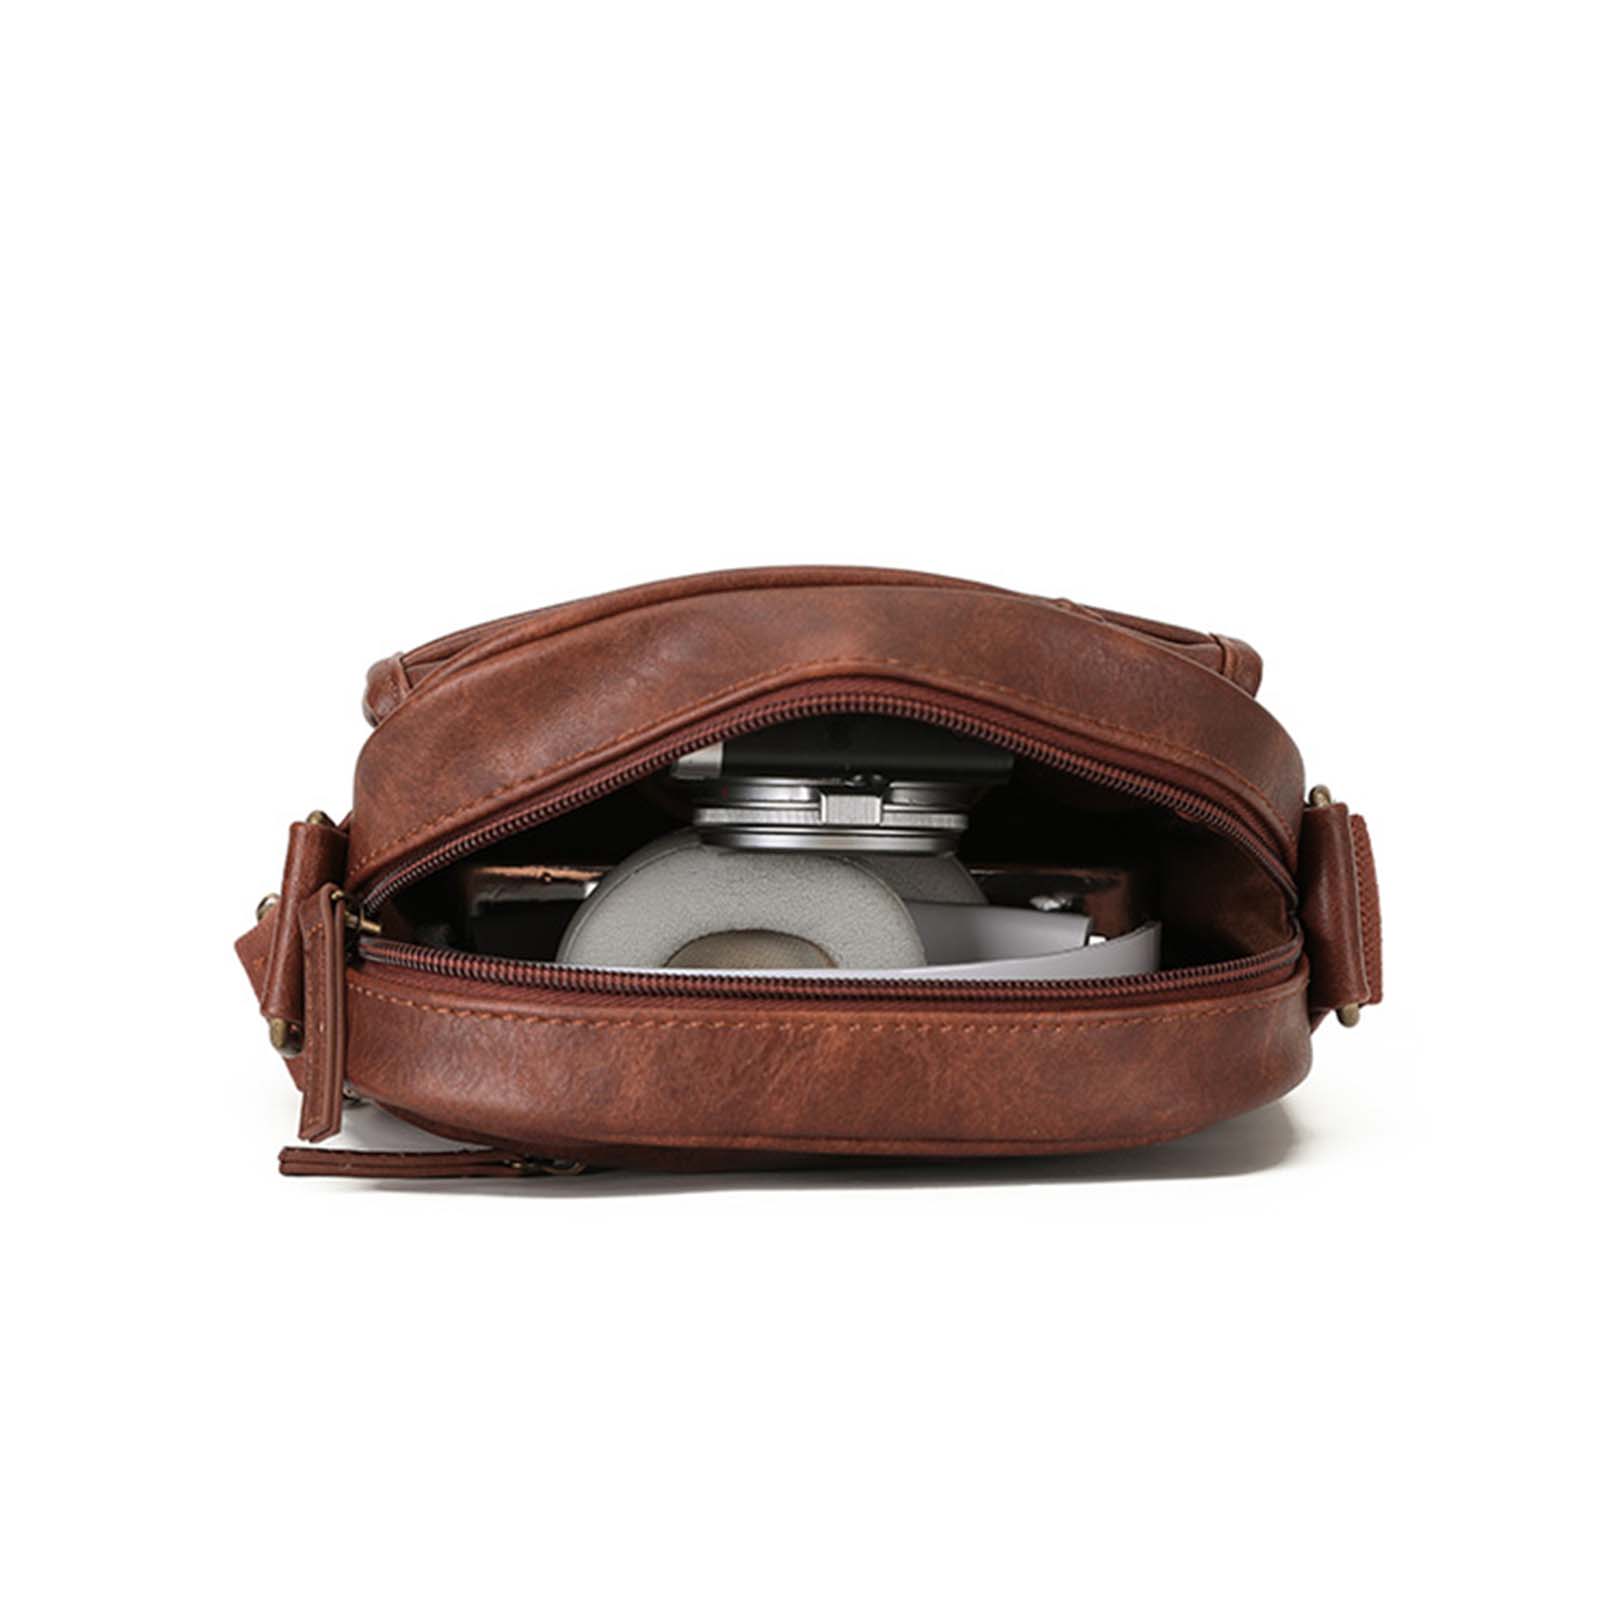 tosca-vl-crossover-bag-with-pocket-brown-open